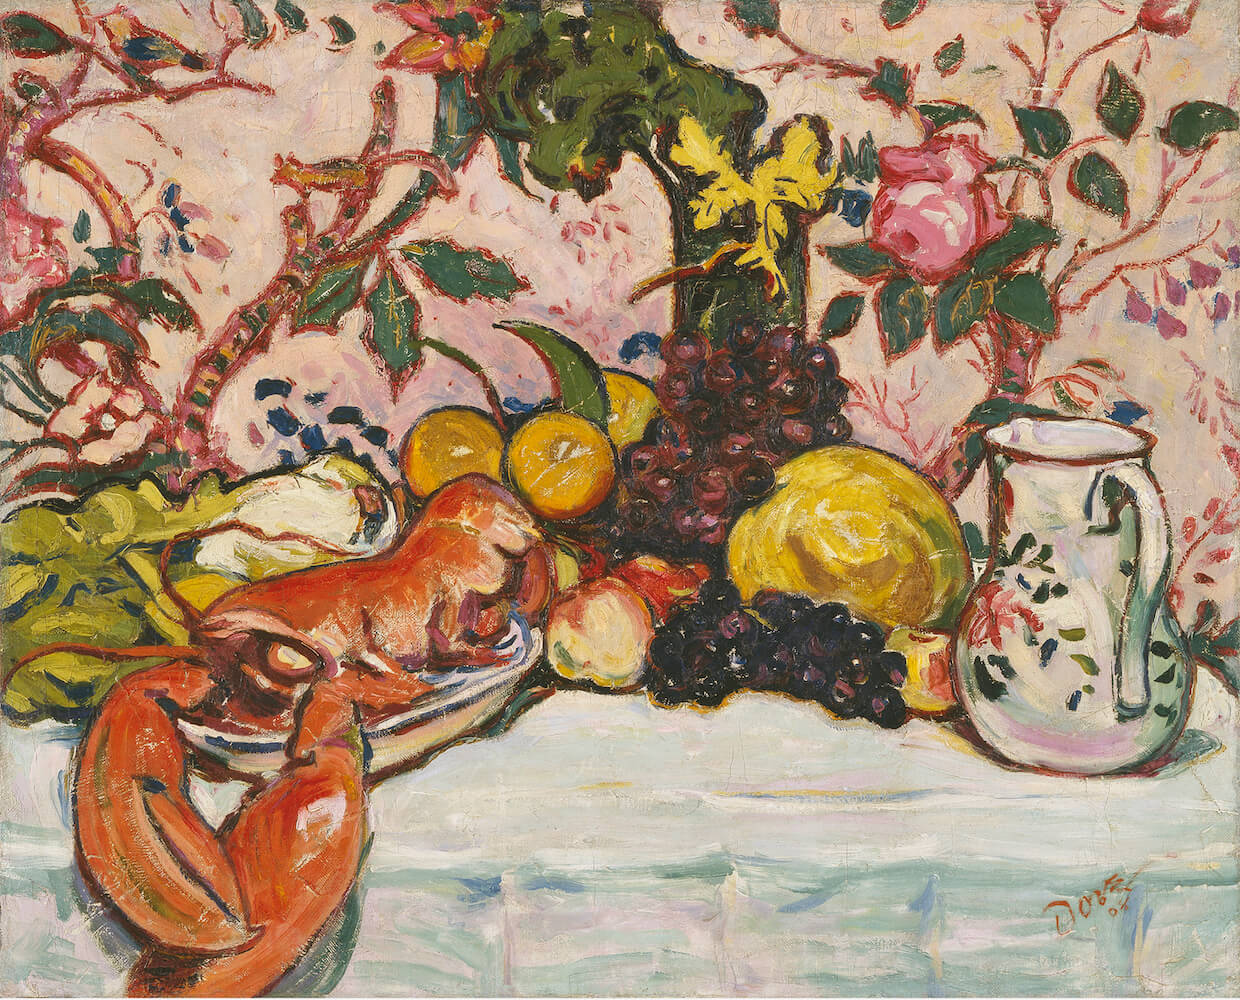 Arthur Dove, The Lobster, 1908, oil on canvas (Amon Carter Museum)